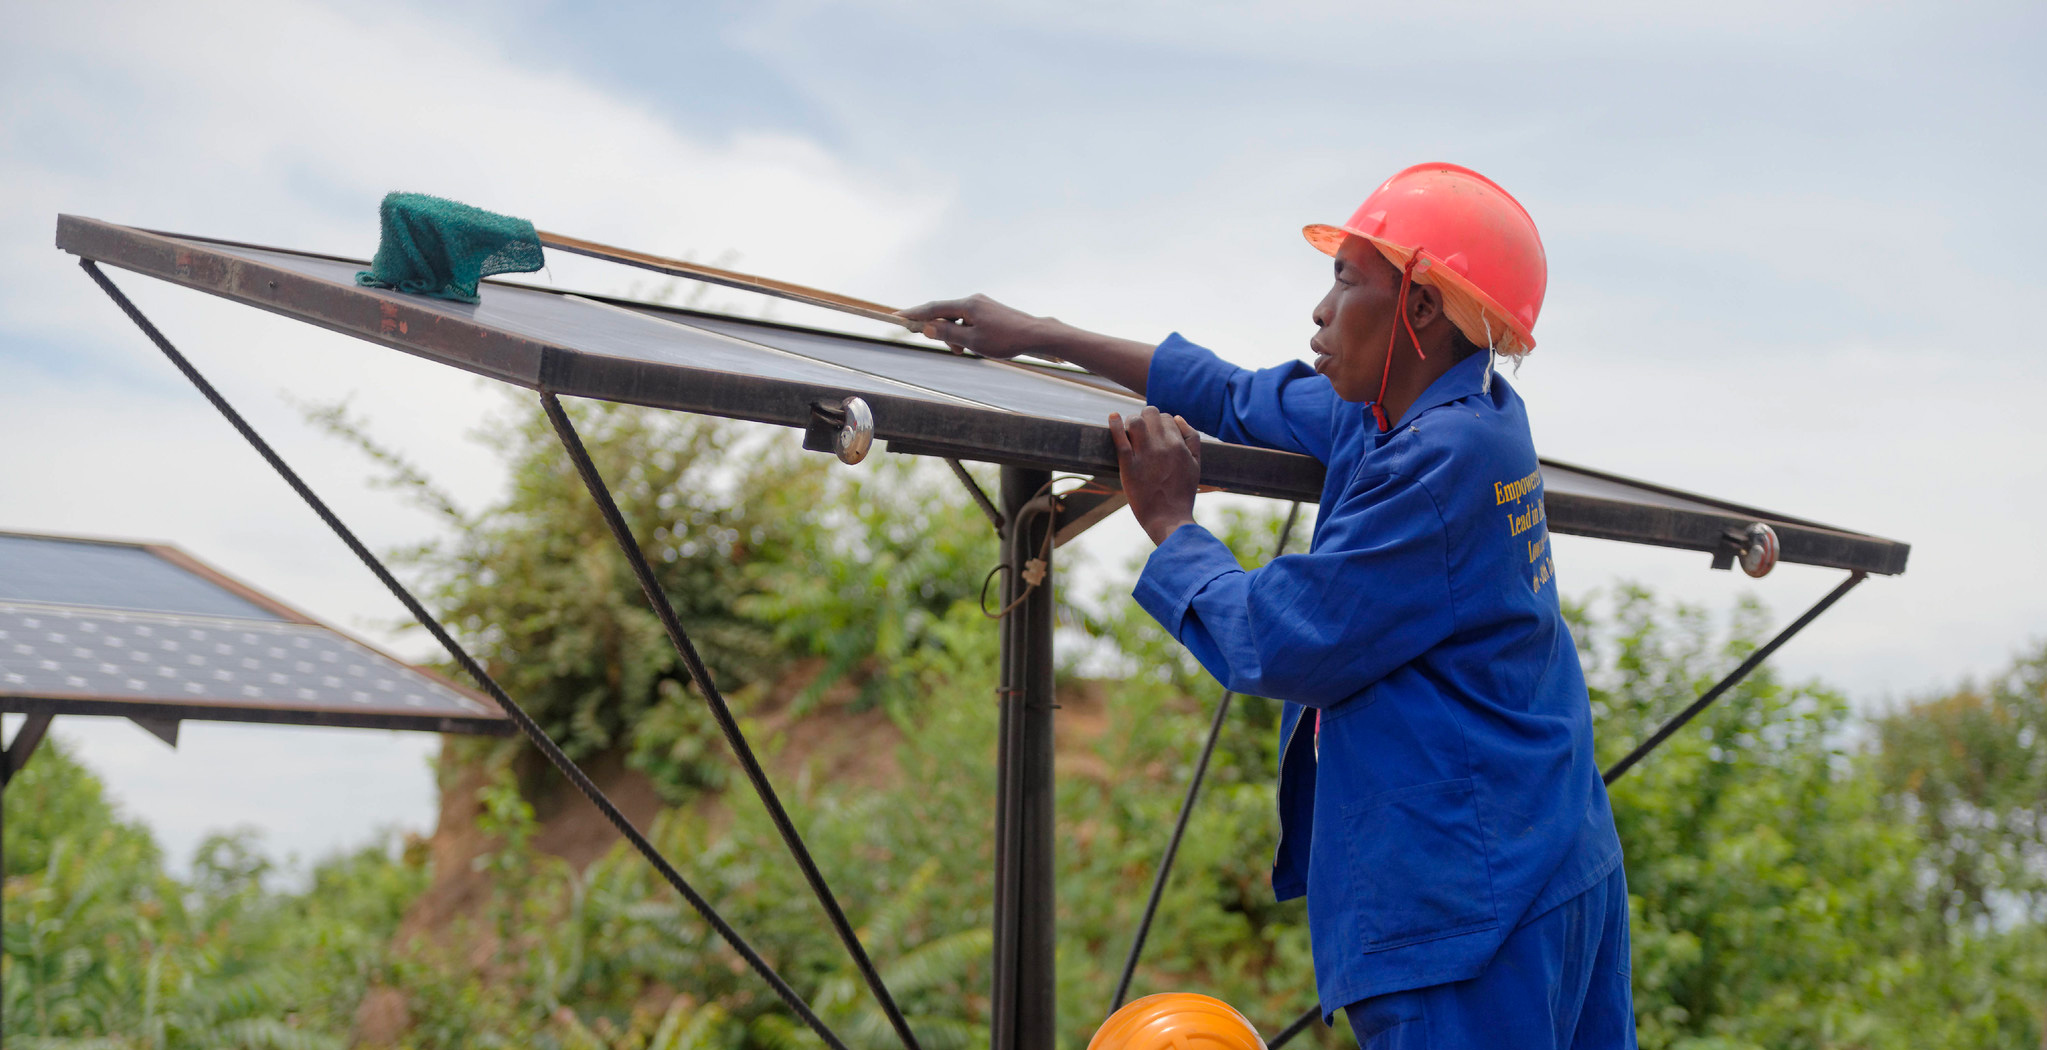 Solar energy skills project in Zambia